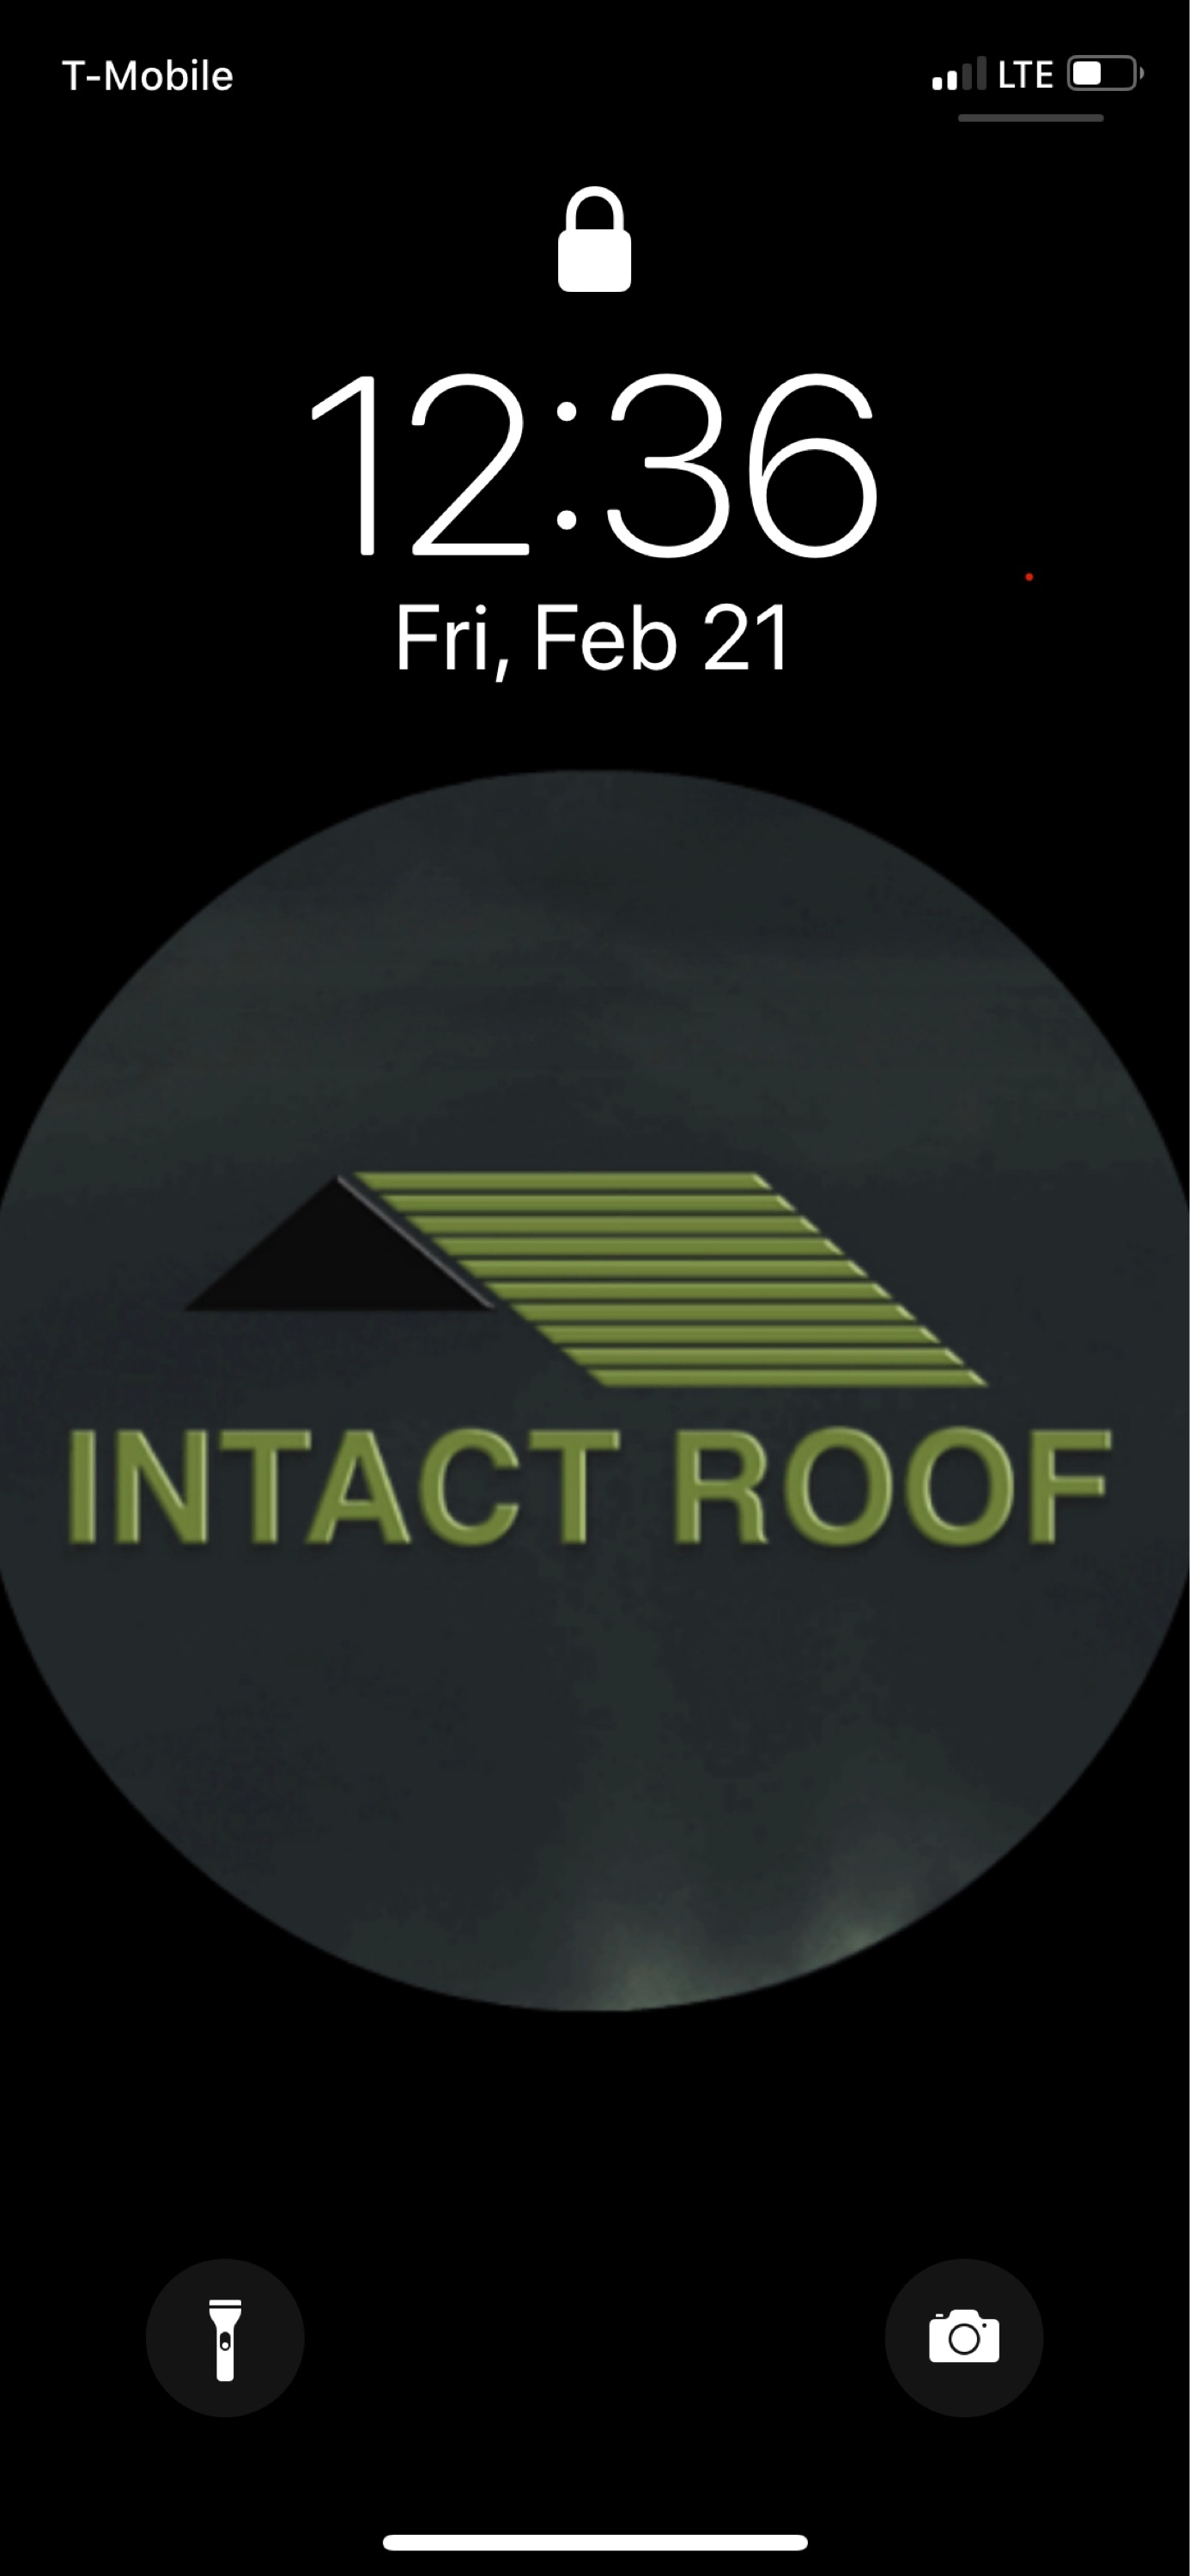 Intact Contracting, Inc. Logo